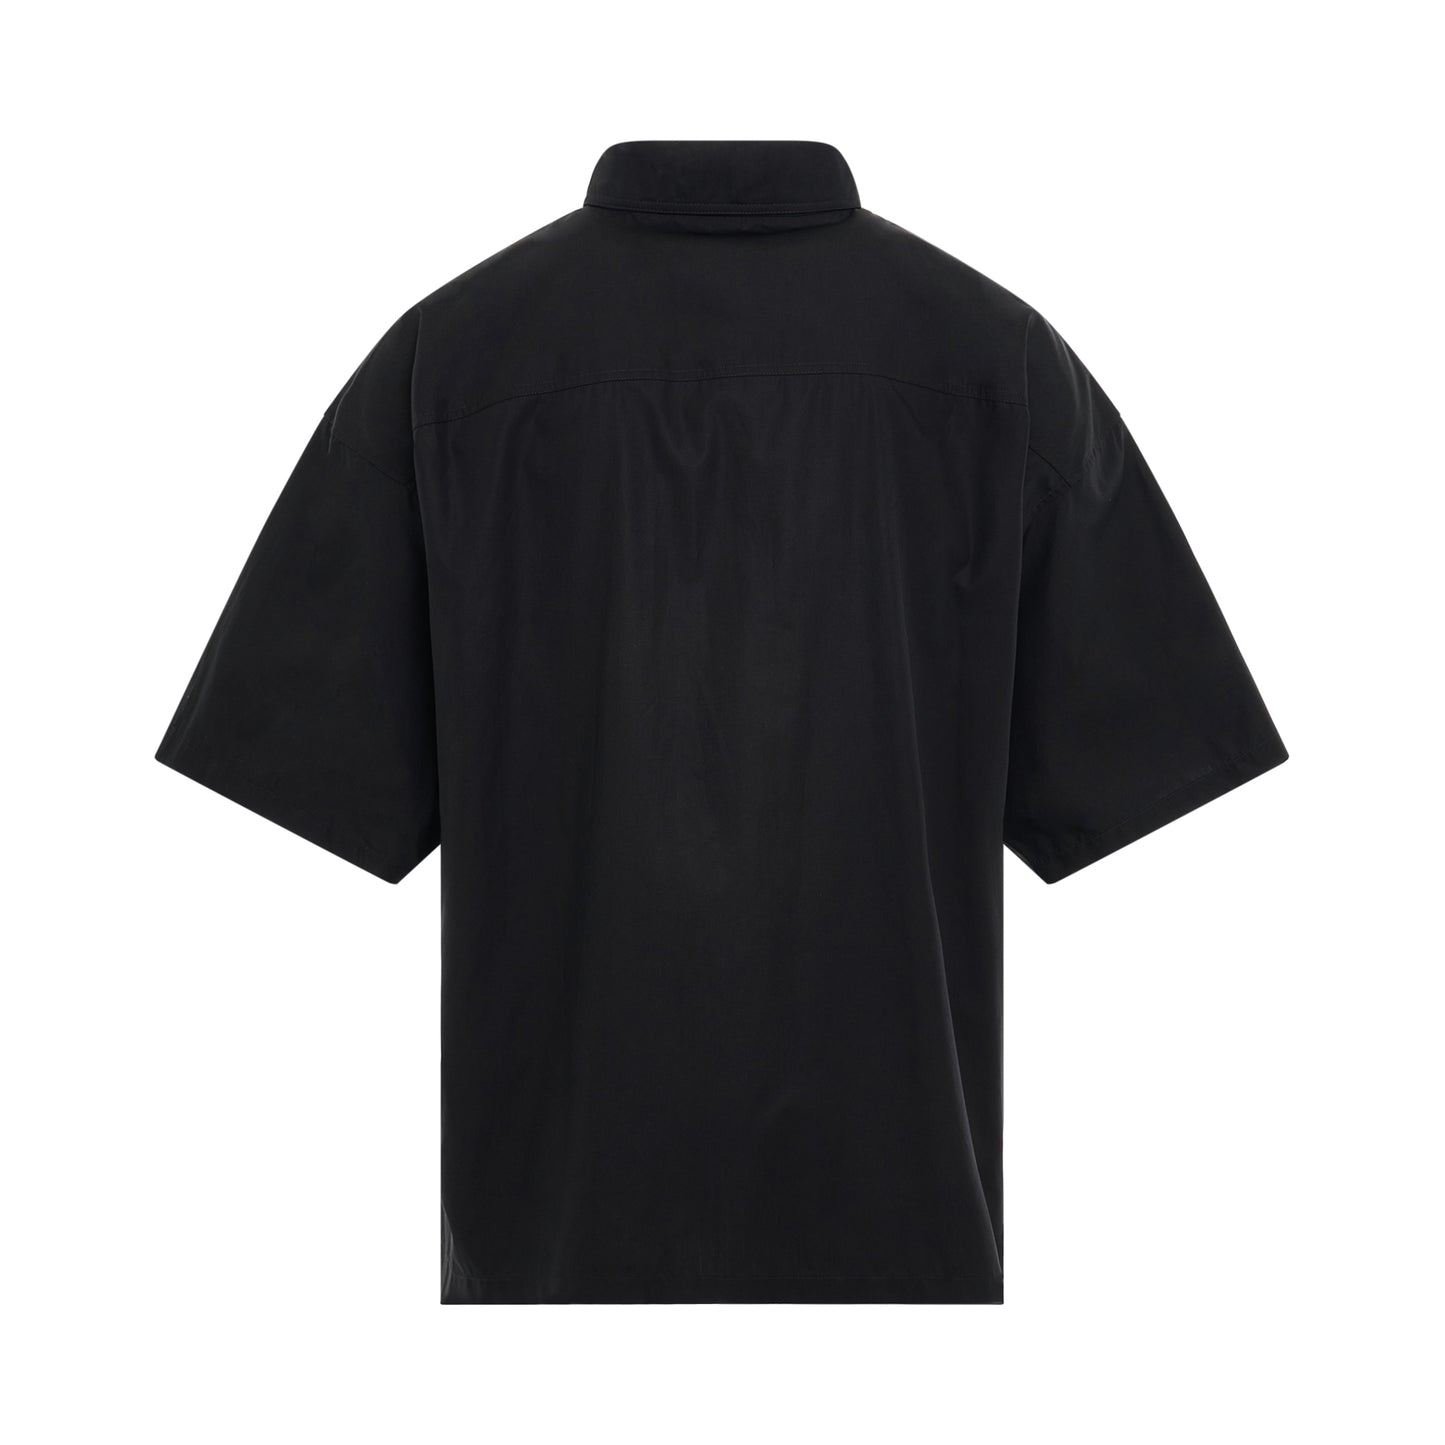 Logo Patch Short Sleeve Shirt in Black